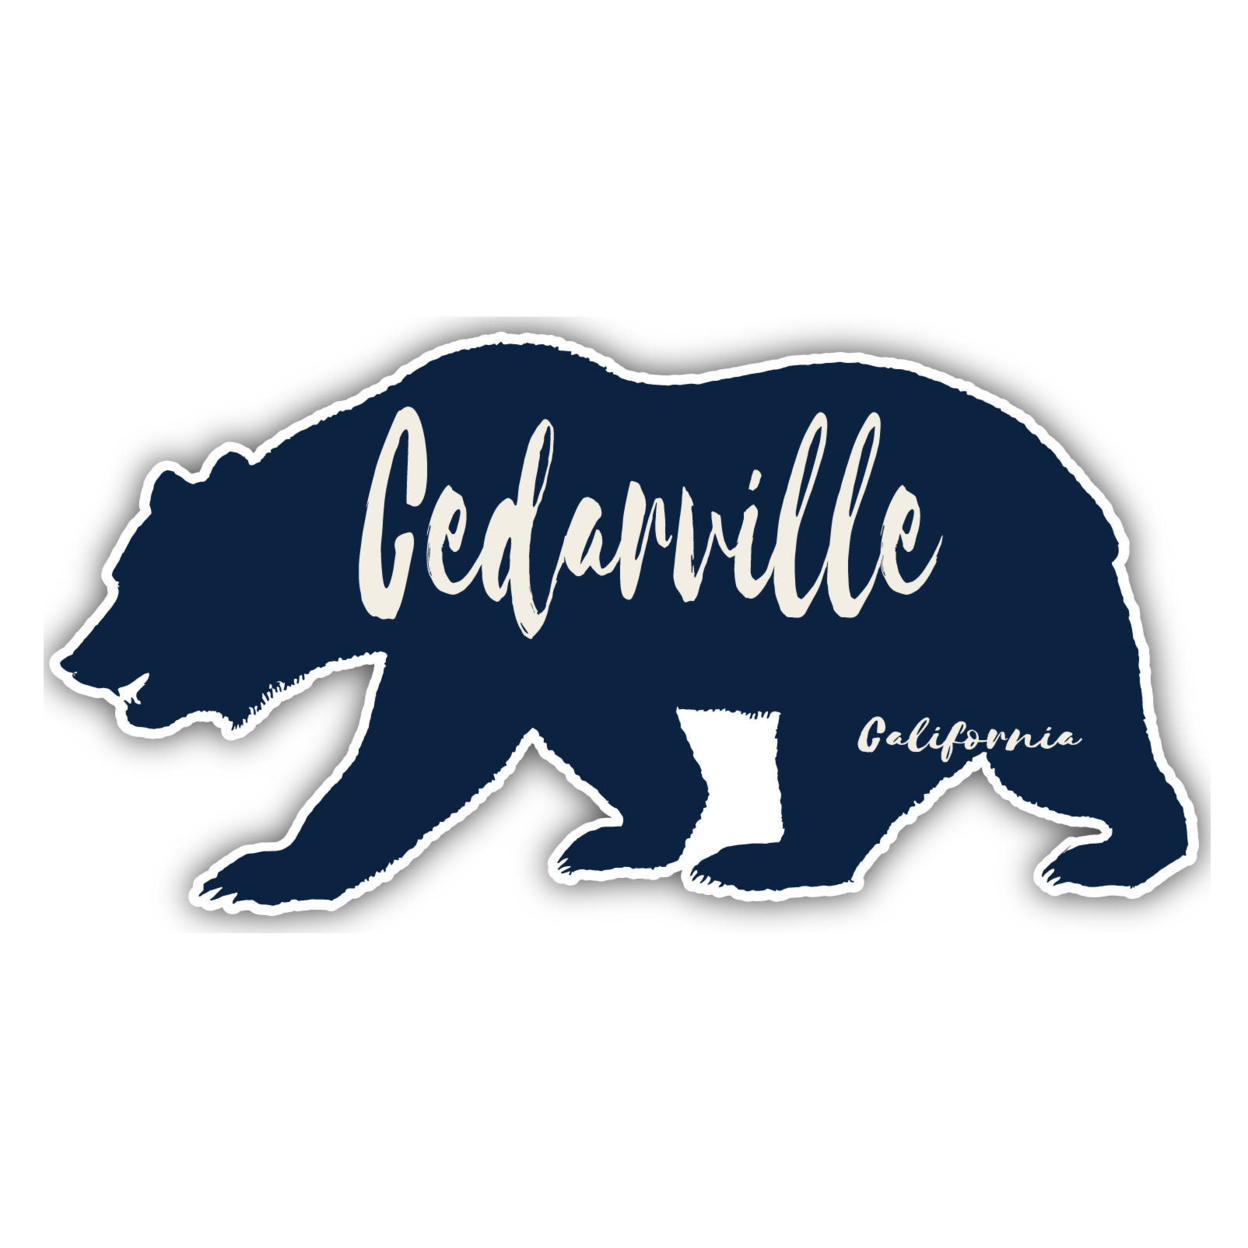 Cedarville California Souvenir Decorative Stickers (Choose Theme And Size) - Single Unit, 12-Inch, Bear